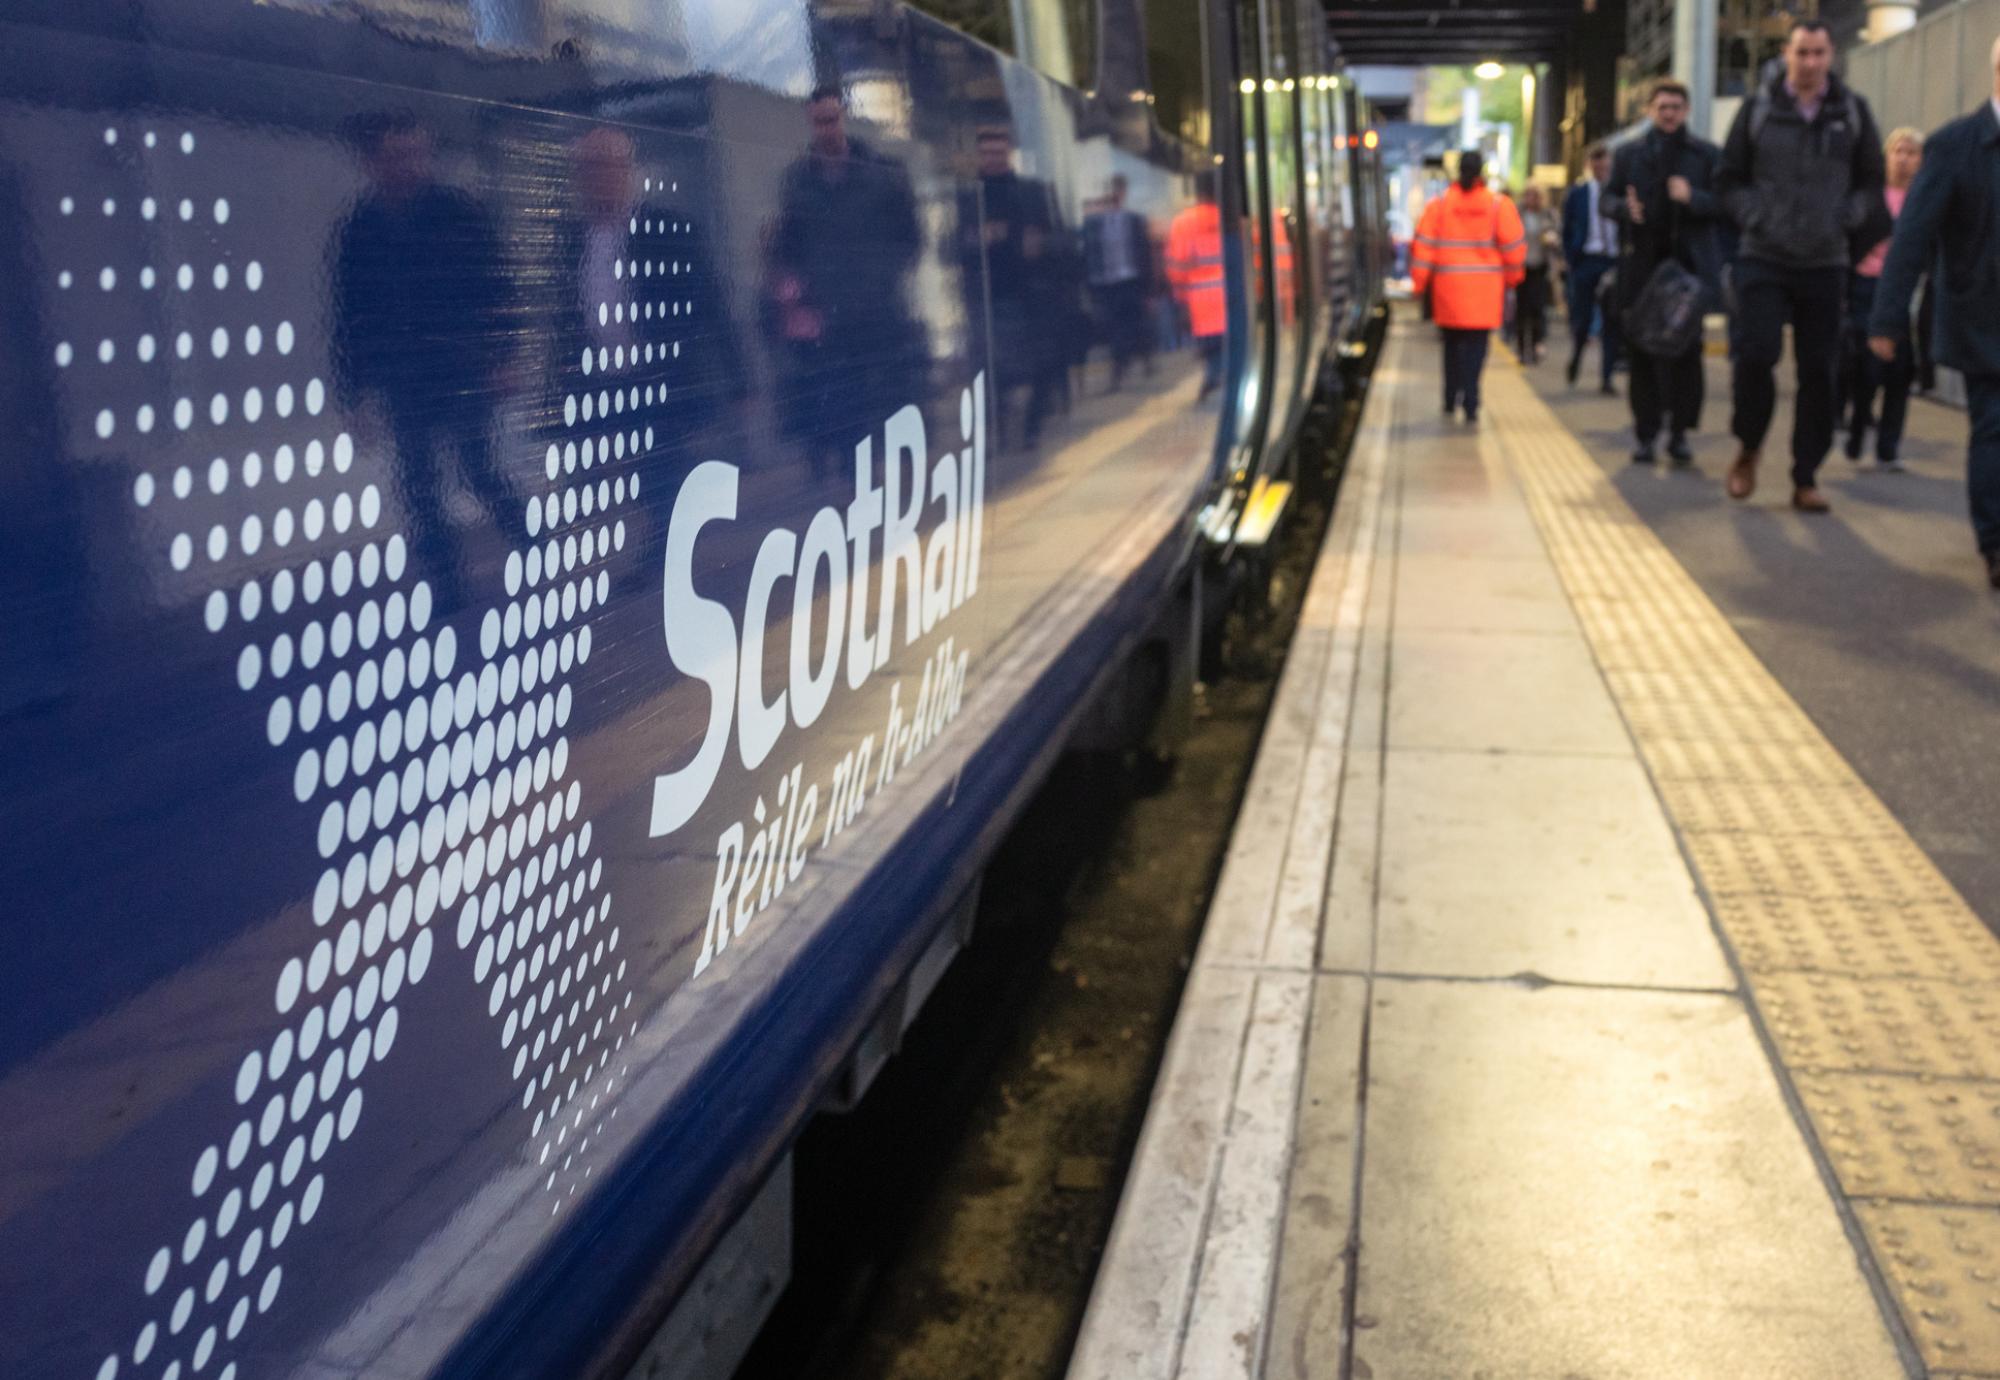 ScotRail train at a station platform